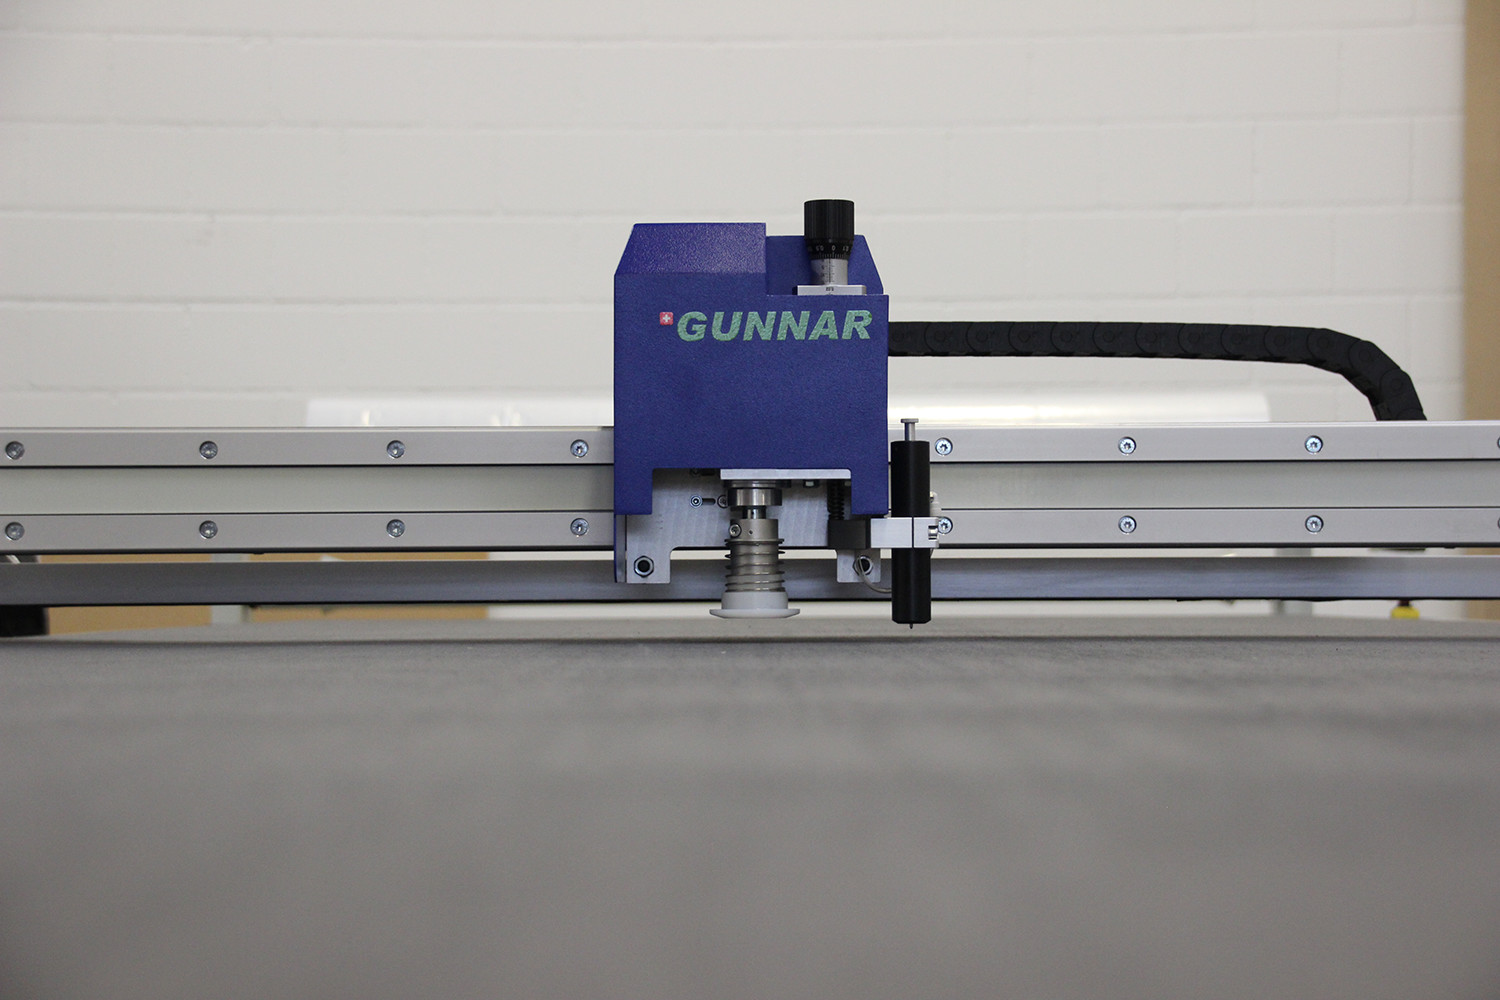 Gunnar AG makes cutting machines for composites.